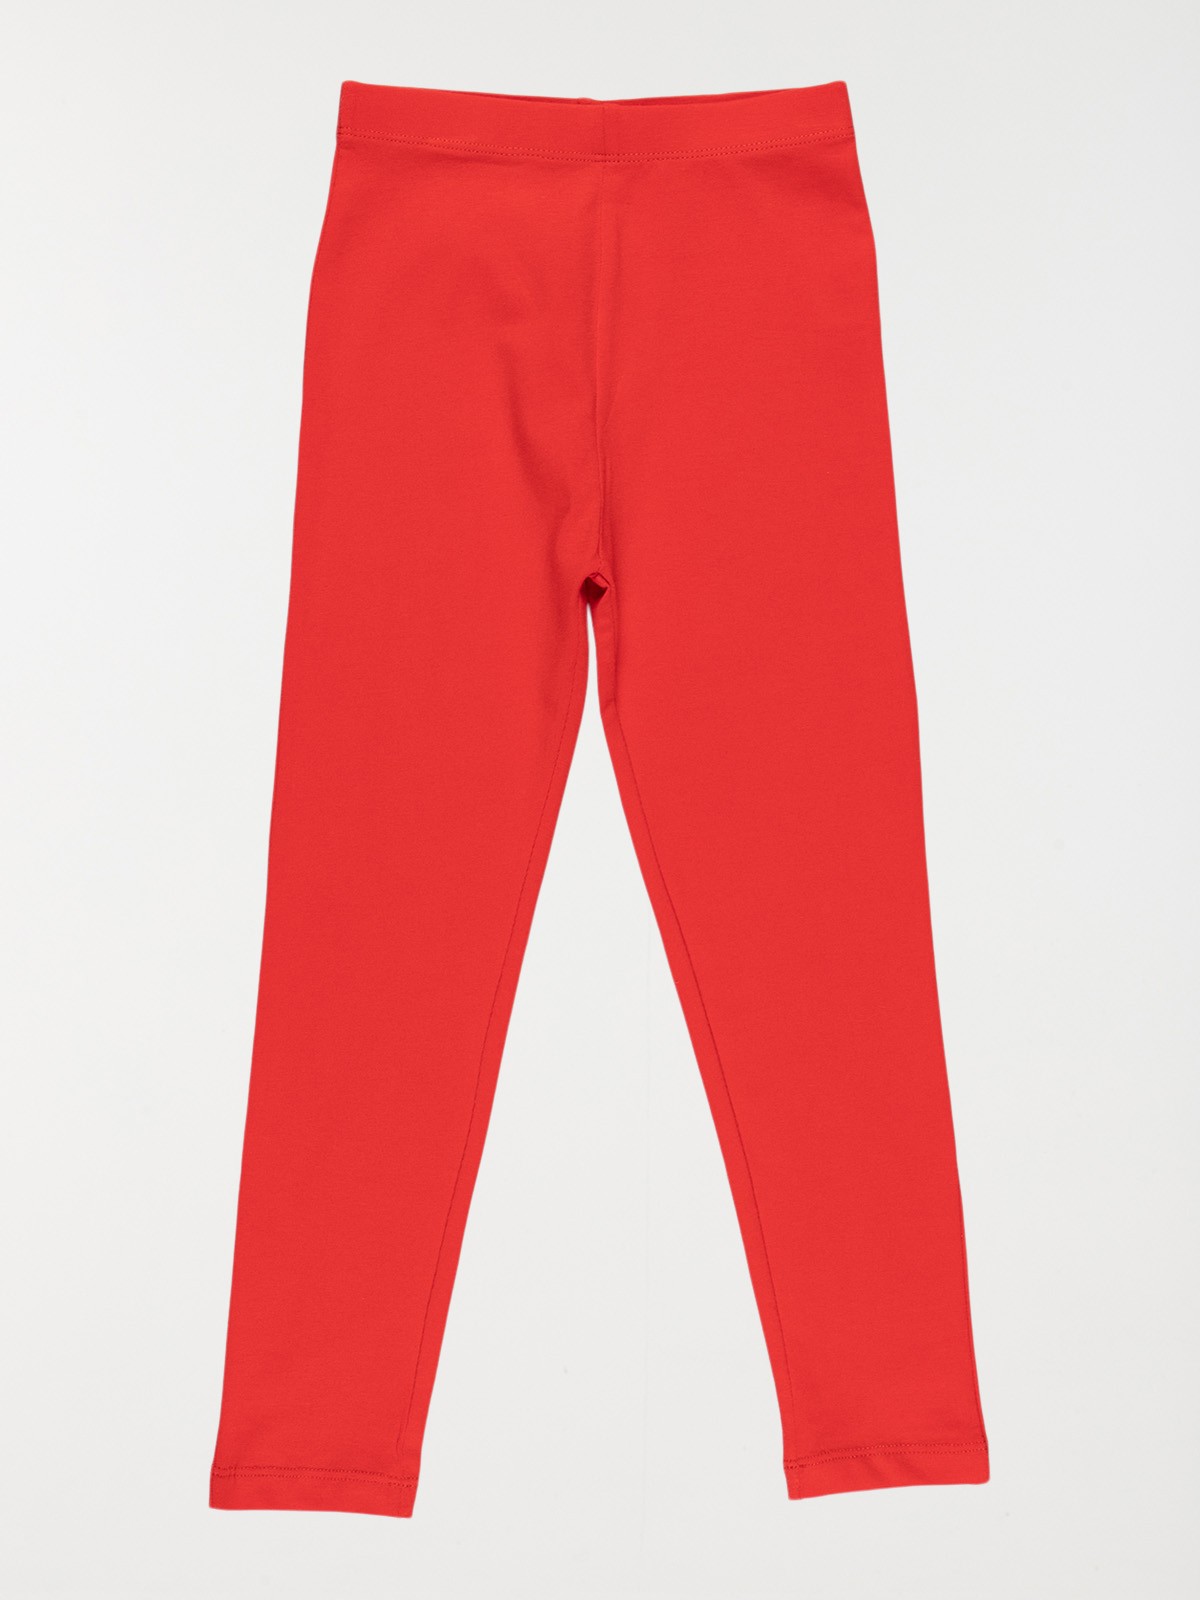 Pantalon - Legging Femme rouge - DistriCenter